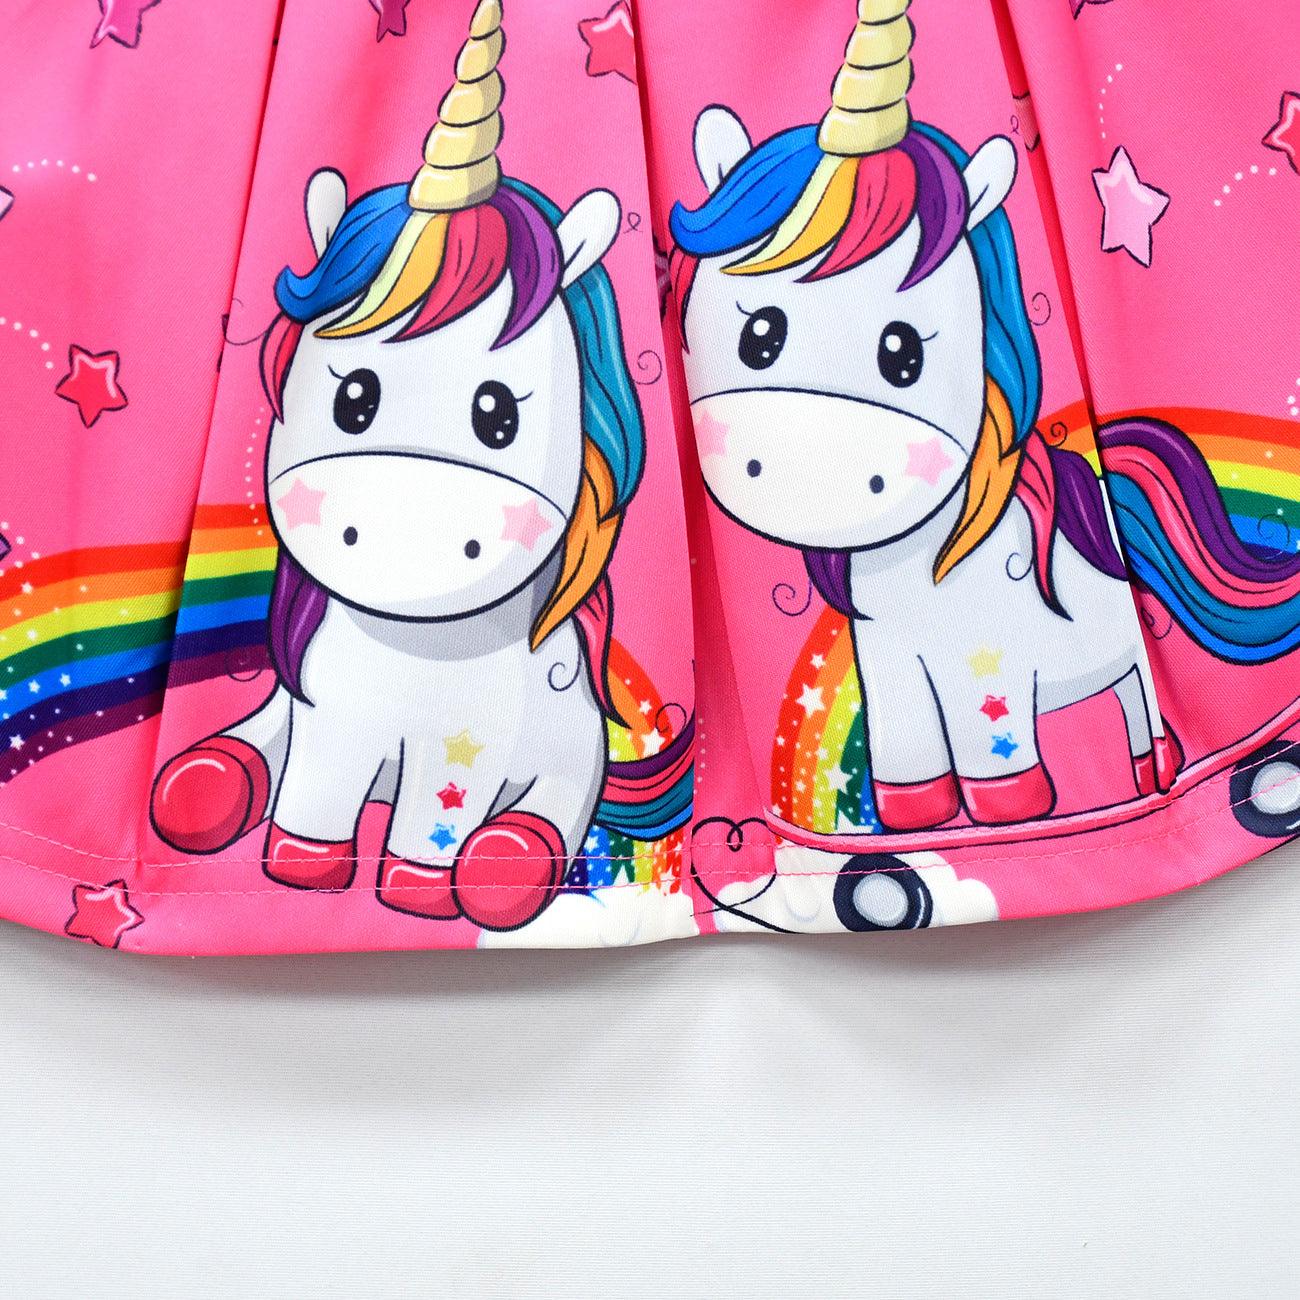 Unicorn Theme Skirt - Unicorn